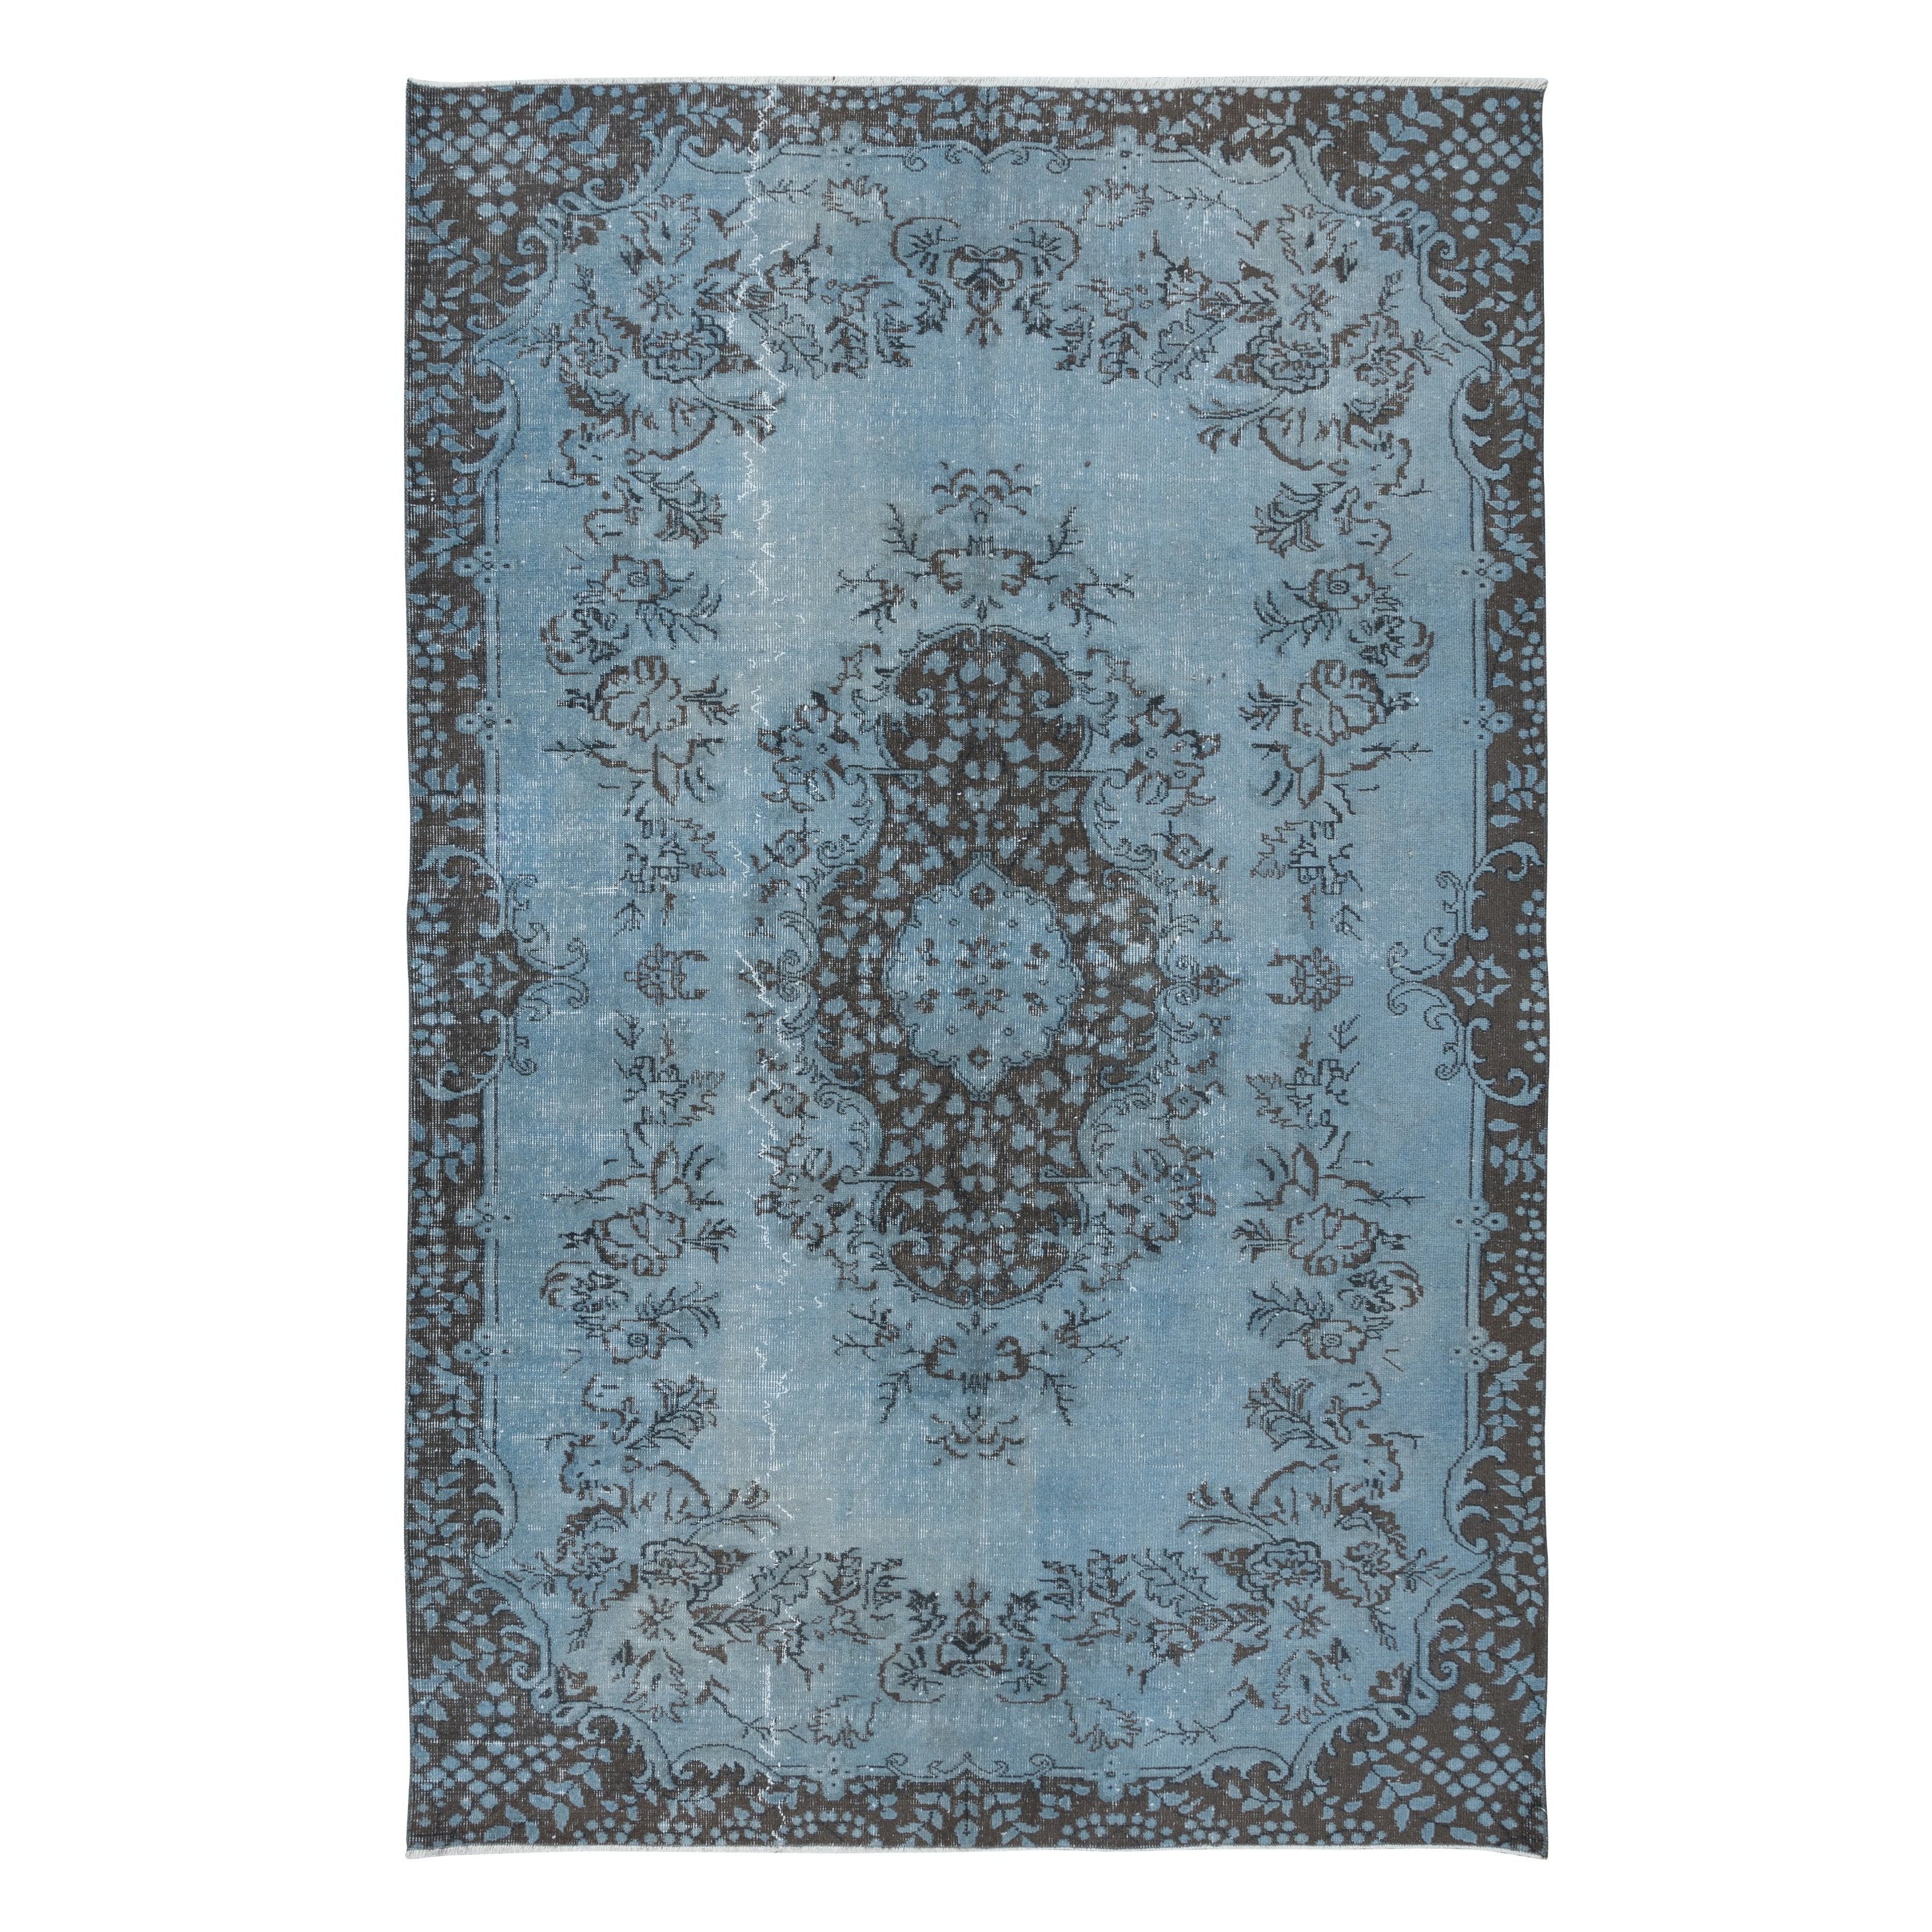 6x9.3 Ft Contemporary Handmade Rug in Light Blue, Sky Blue Anatolian Wool Carpet